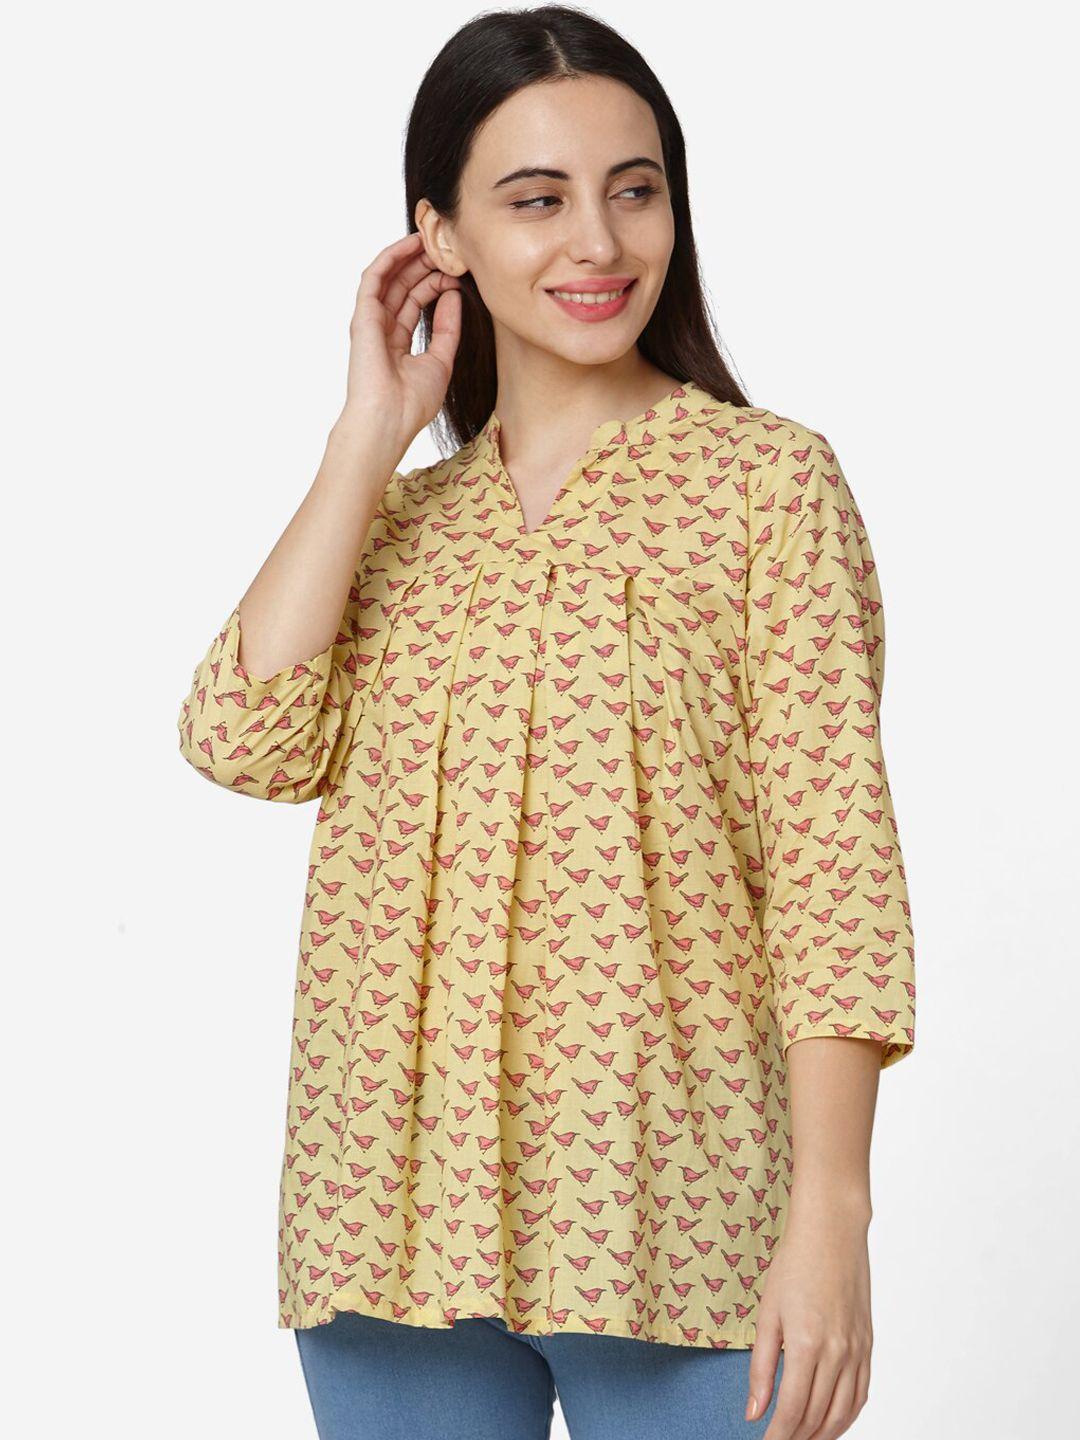 saanjh women's yellow & pink printed tunic